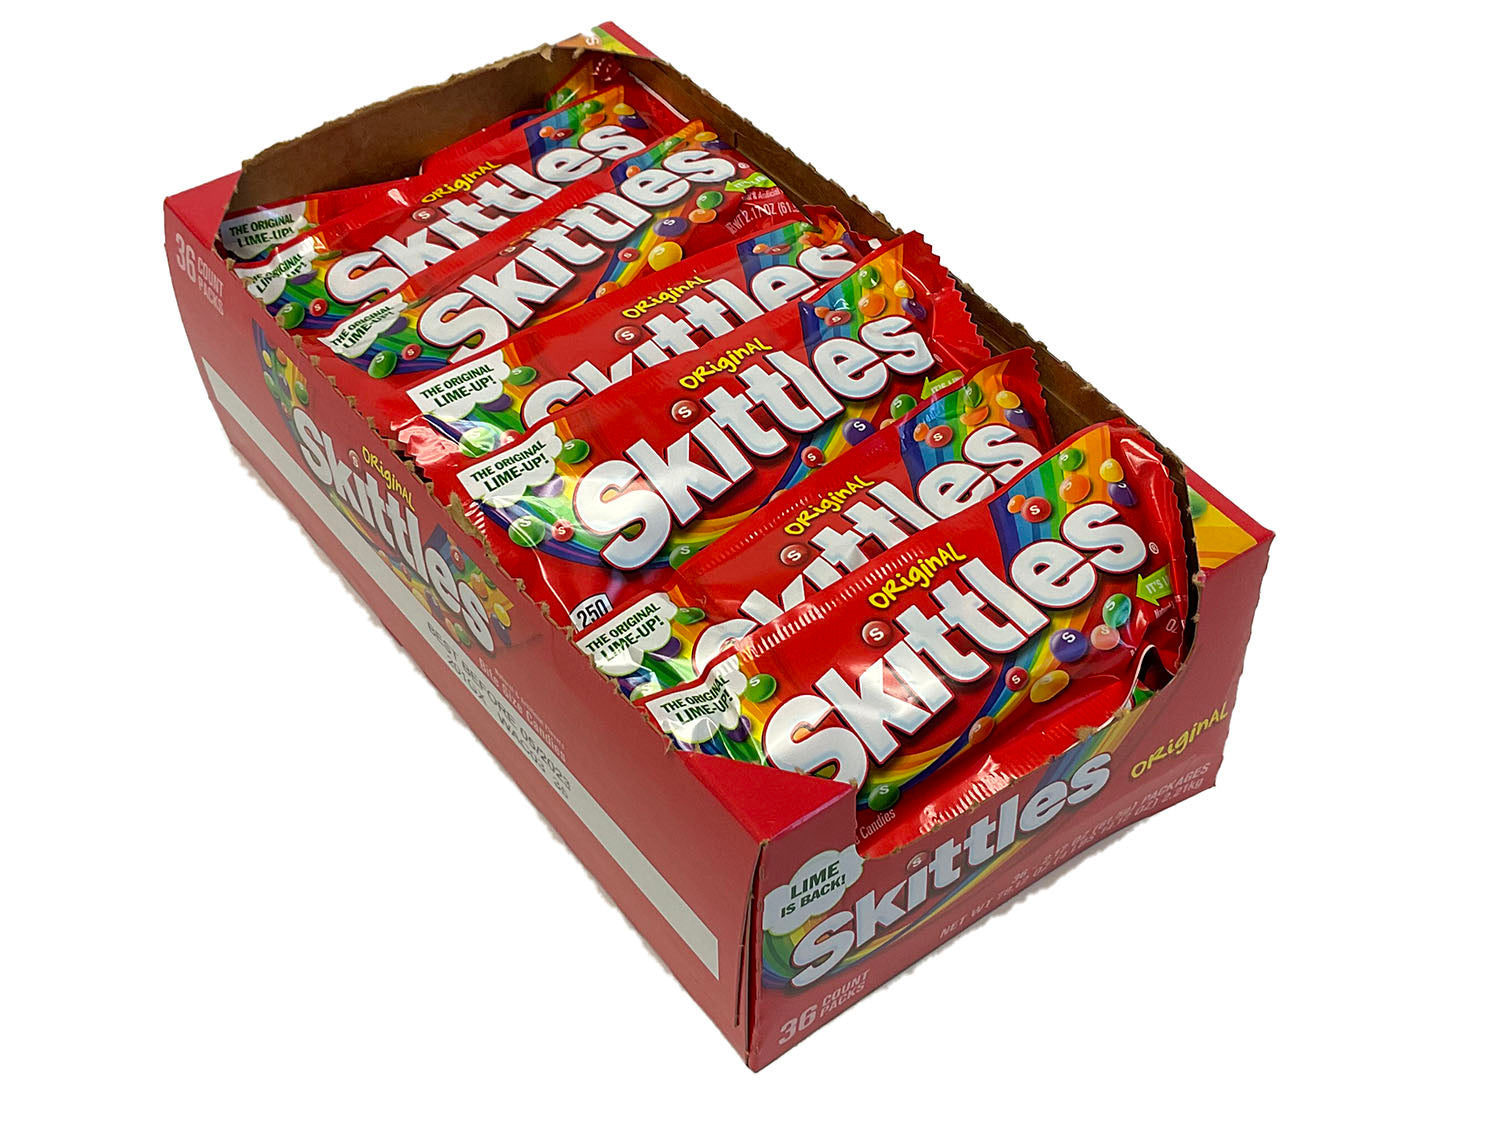 Skittles Original - 2.17 oz pkg